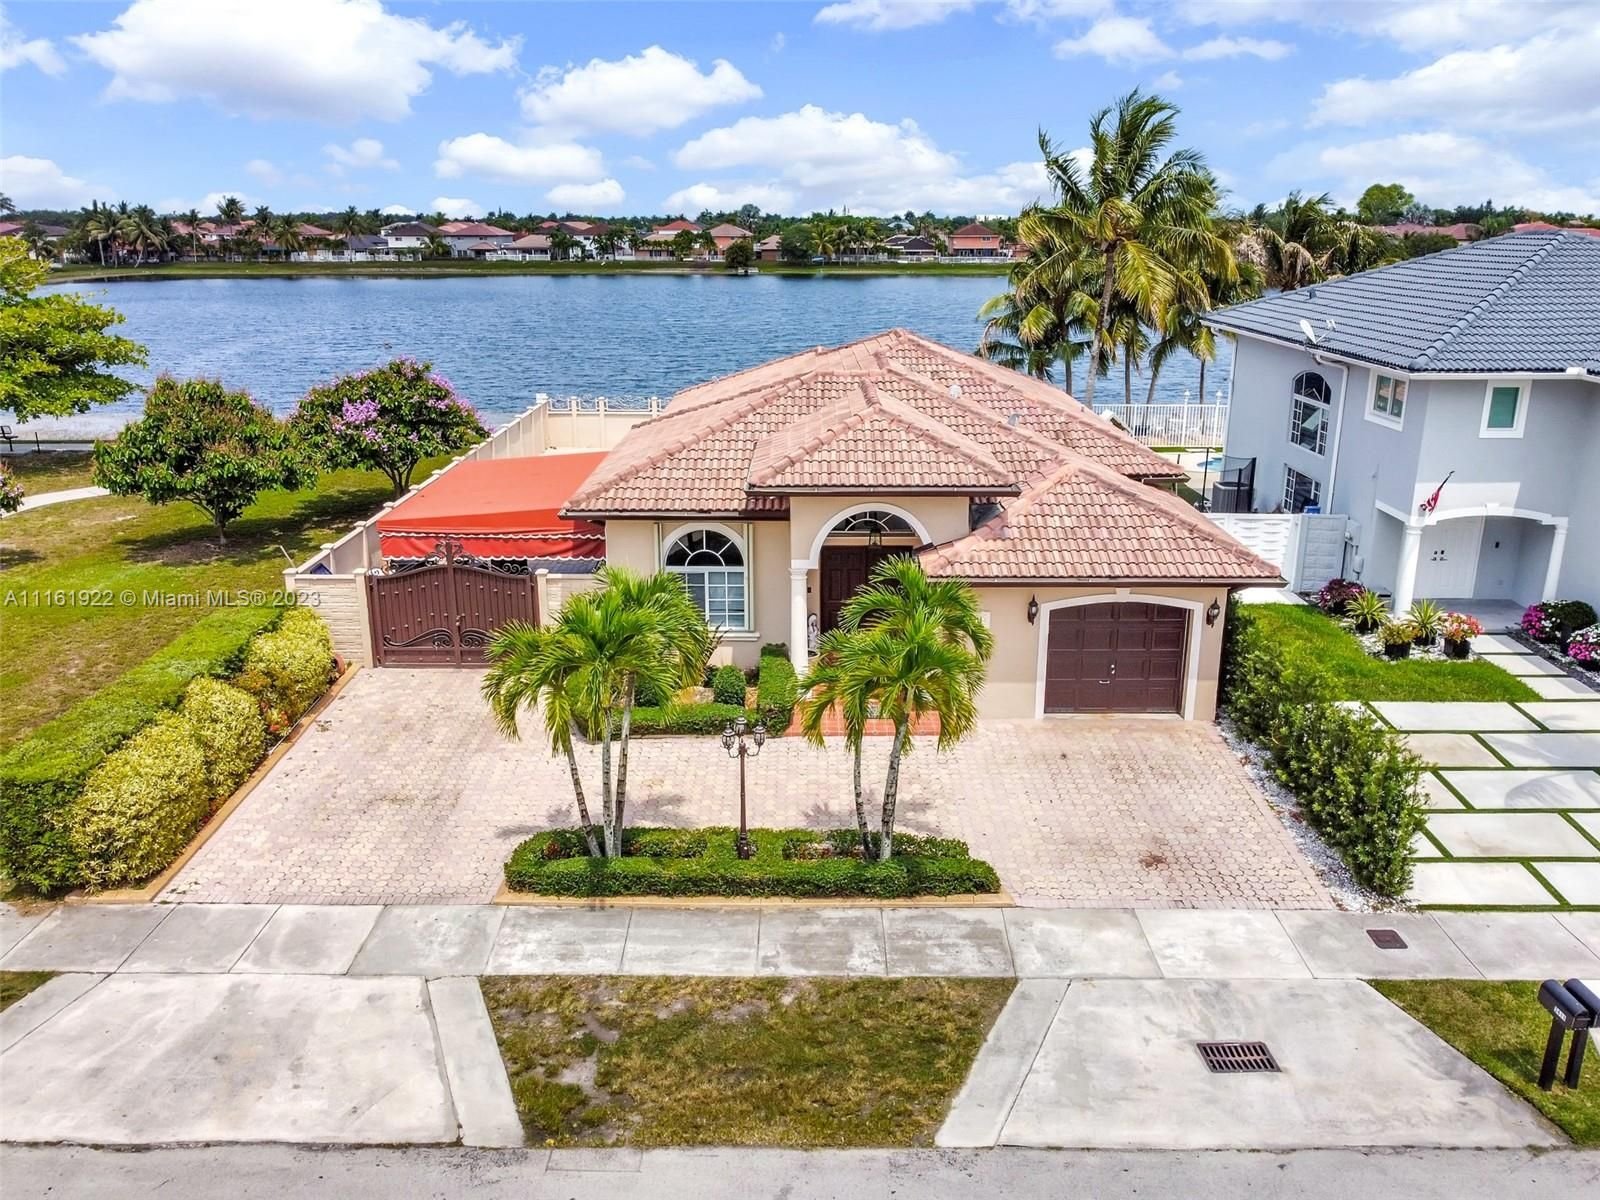 Real estate property located at 3411 156th Ct, Miami-Dade County, CARIBE LAKES PH III, Miami, FL